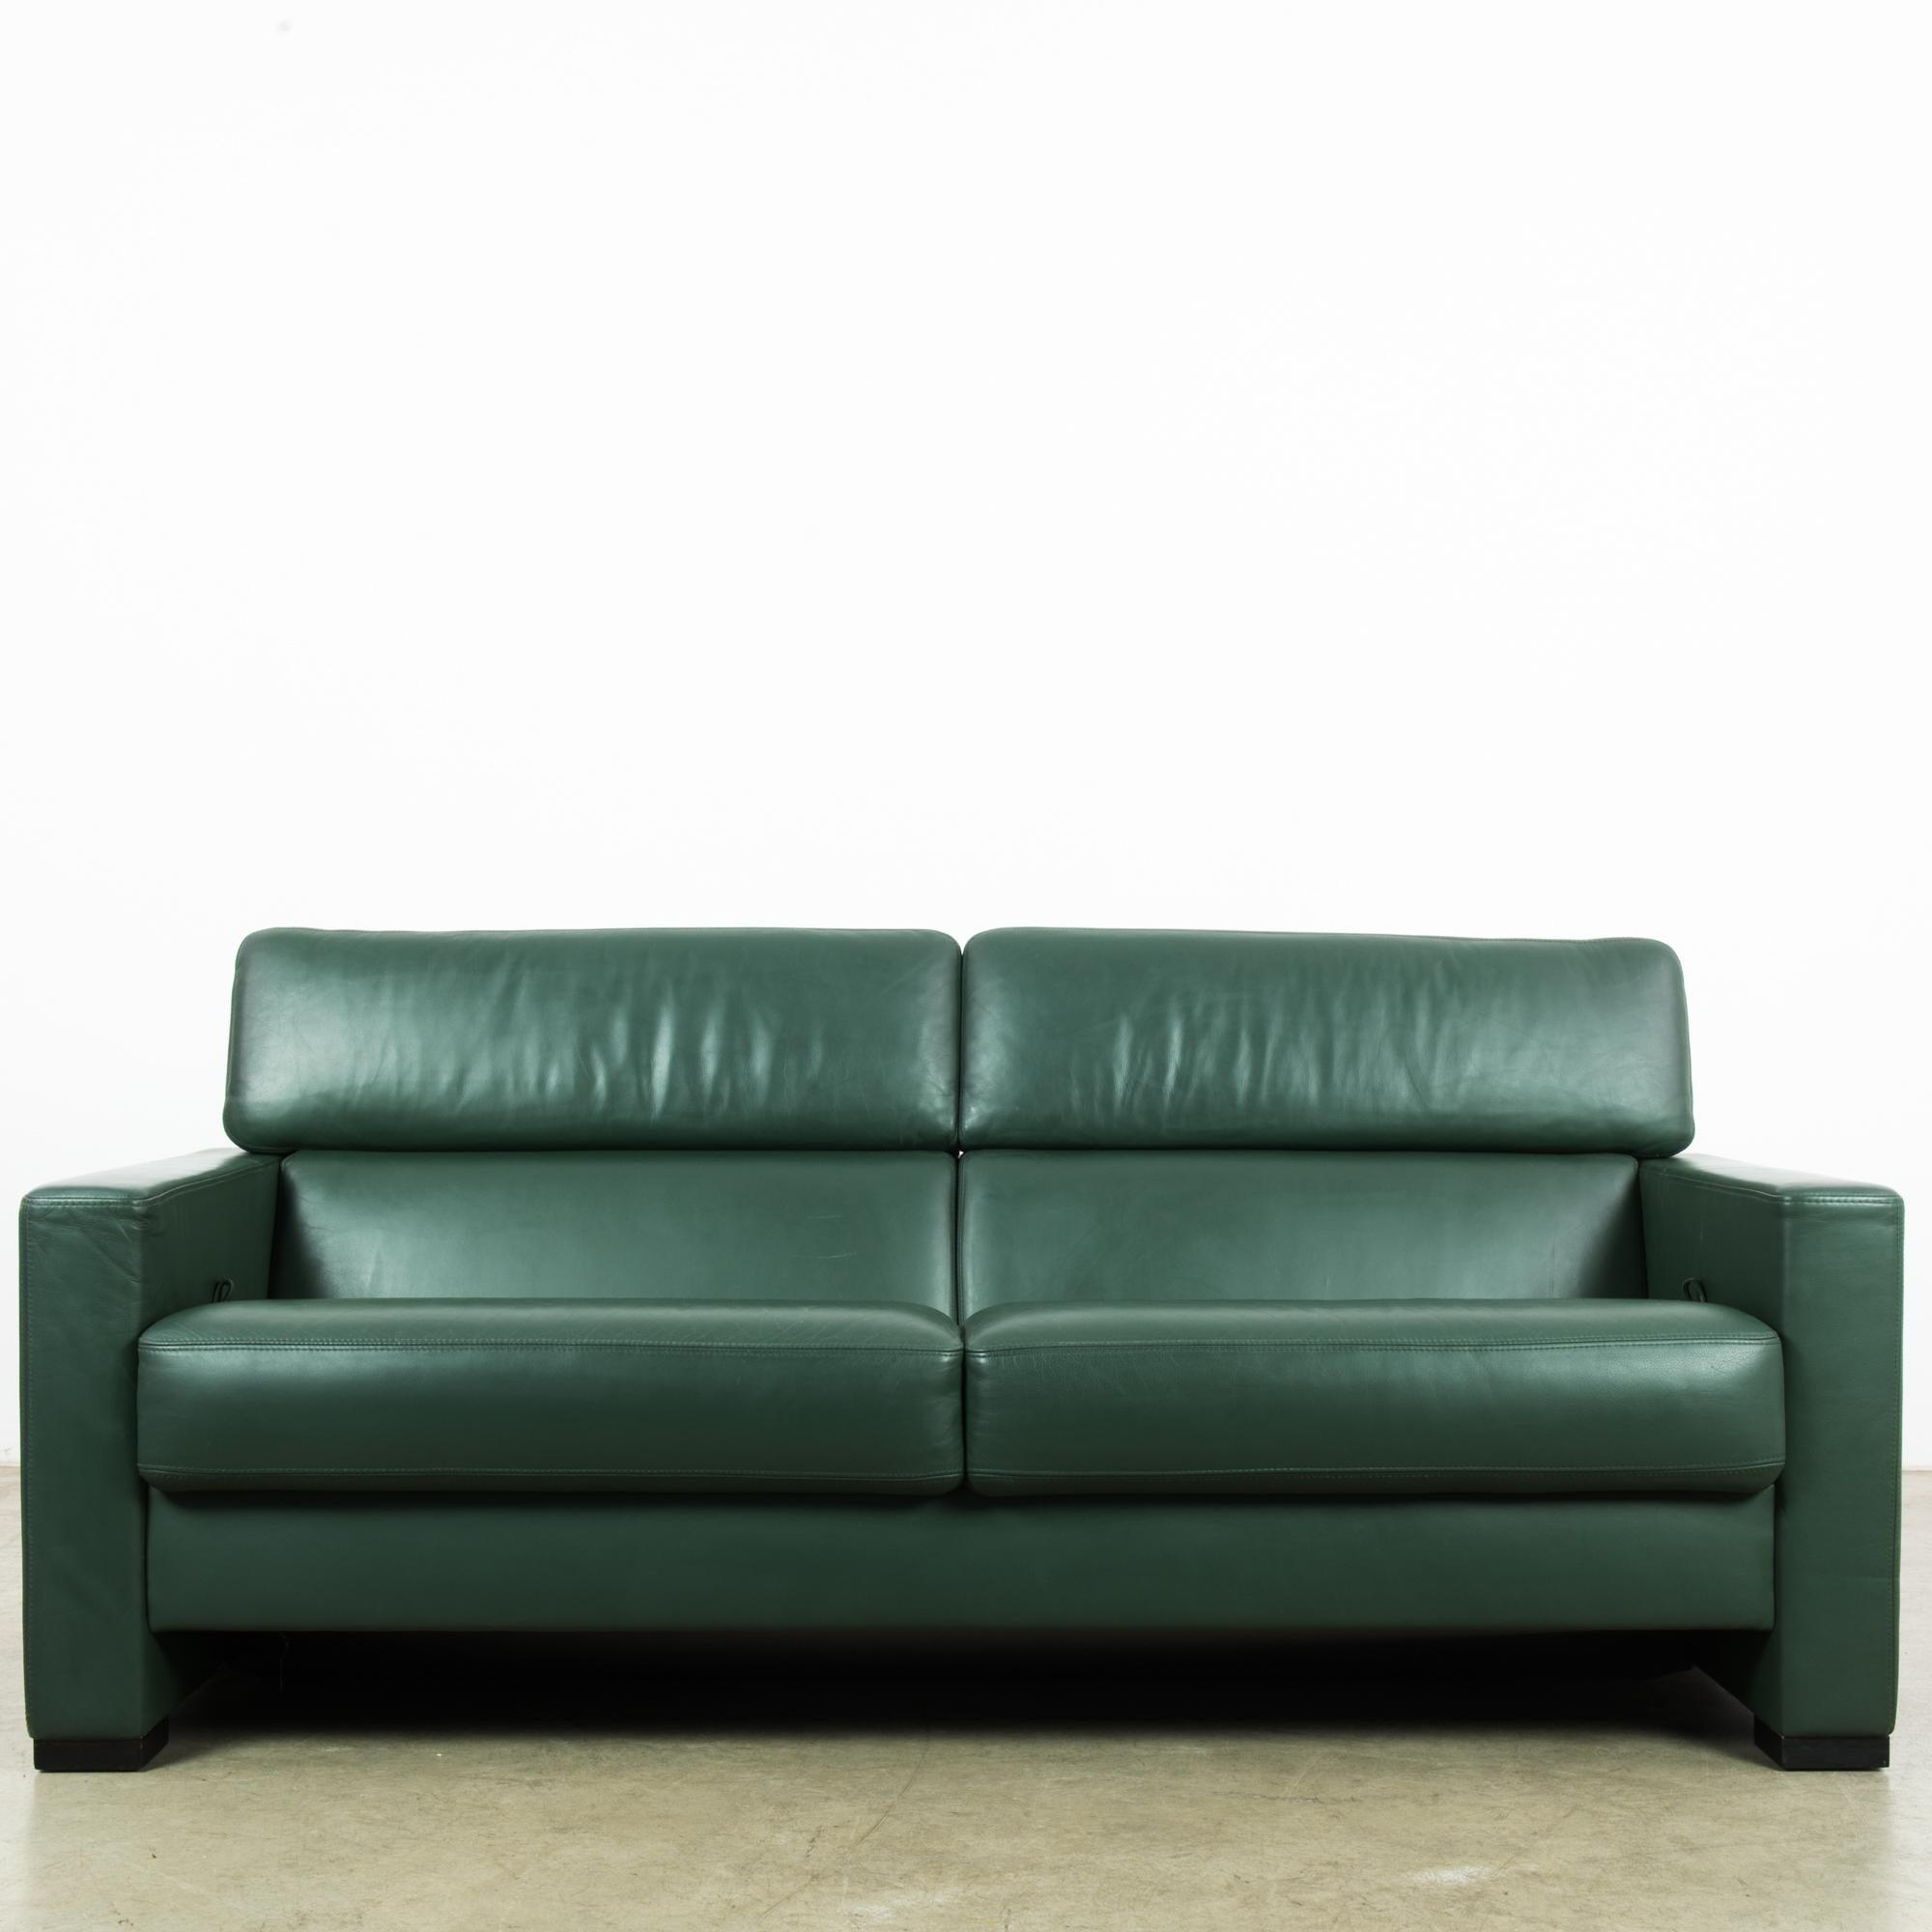 1980s German Leather Sofa by Brühl 5